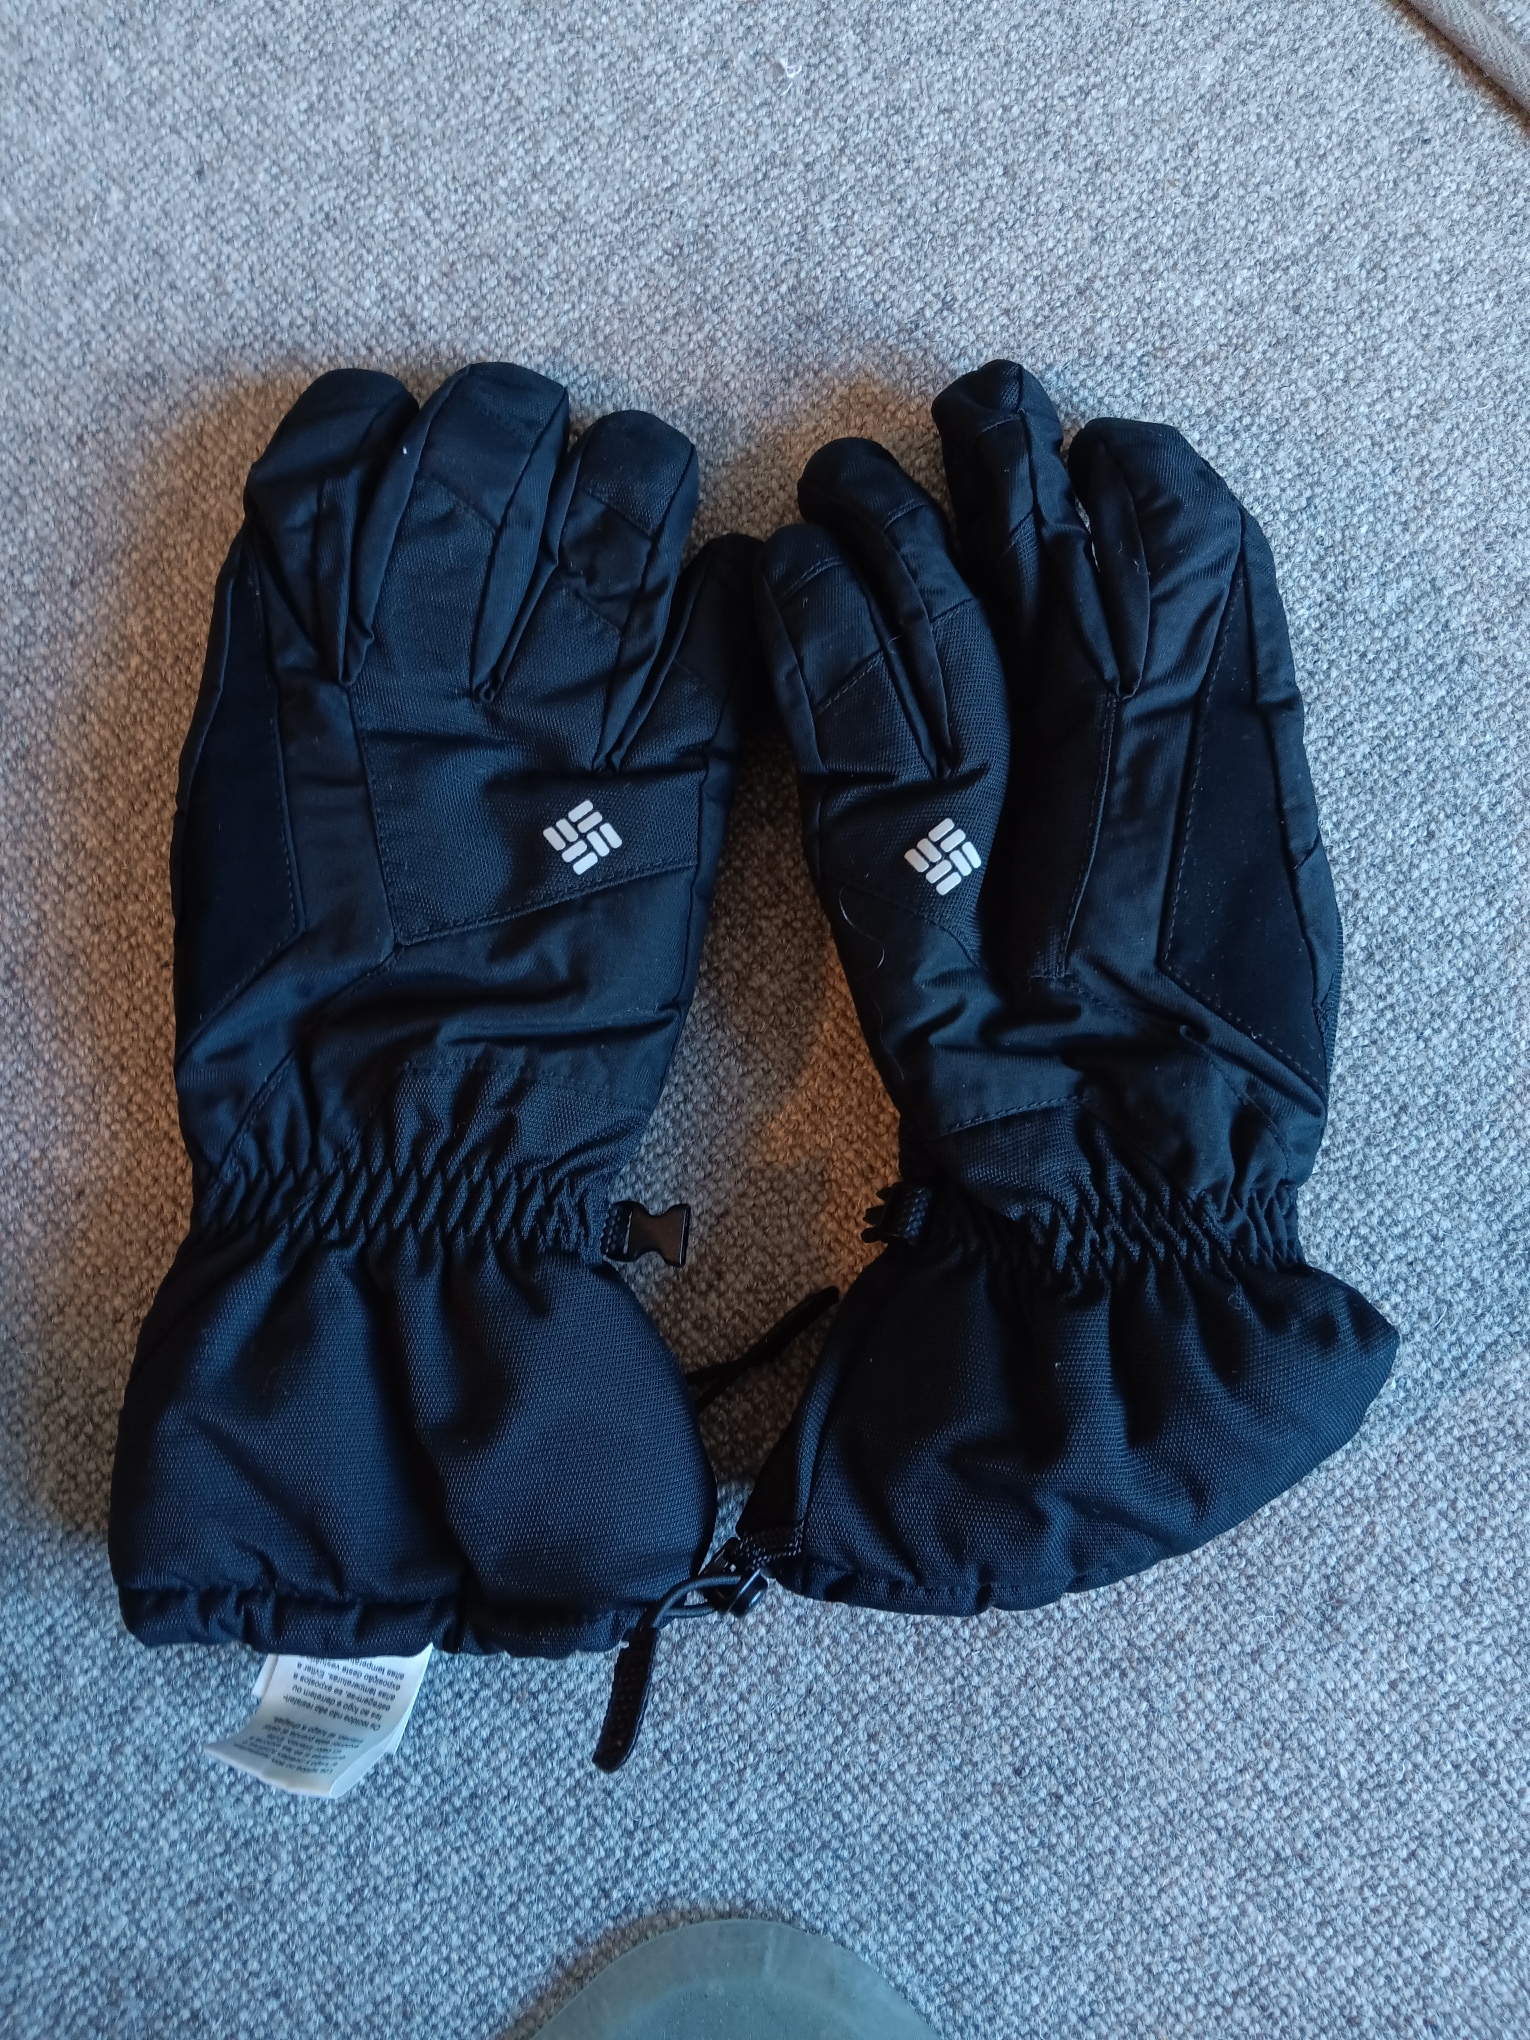 Black Used XL Men's Columbia Gloves